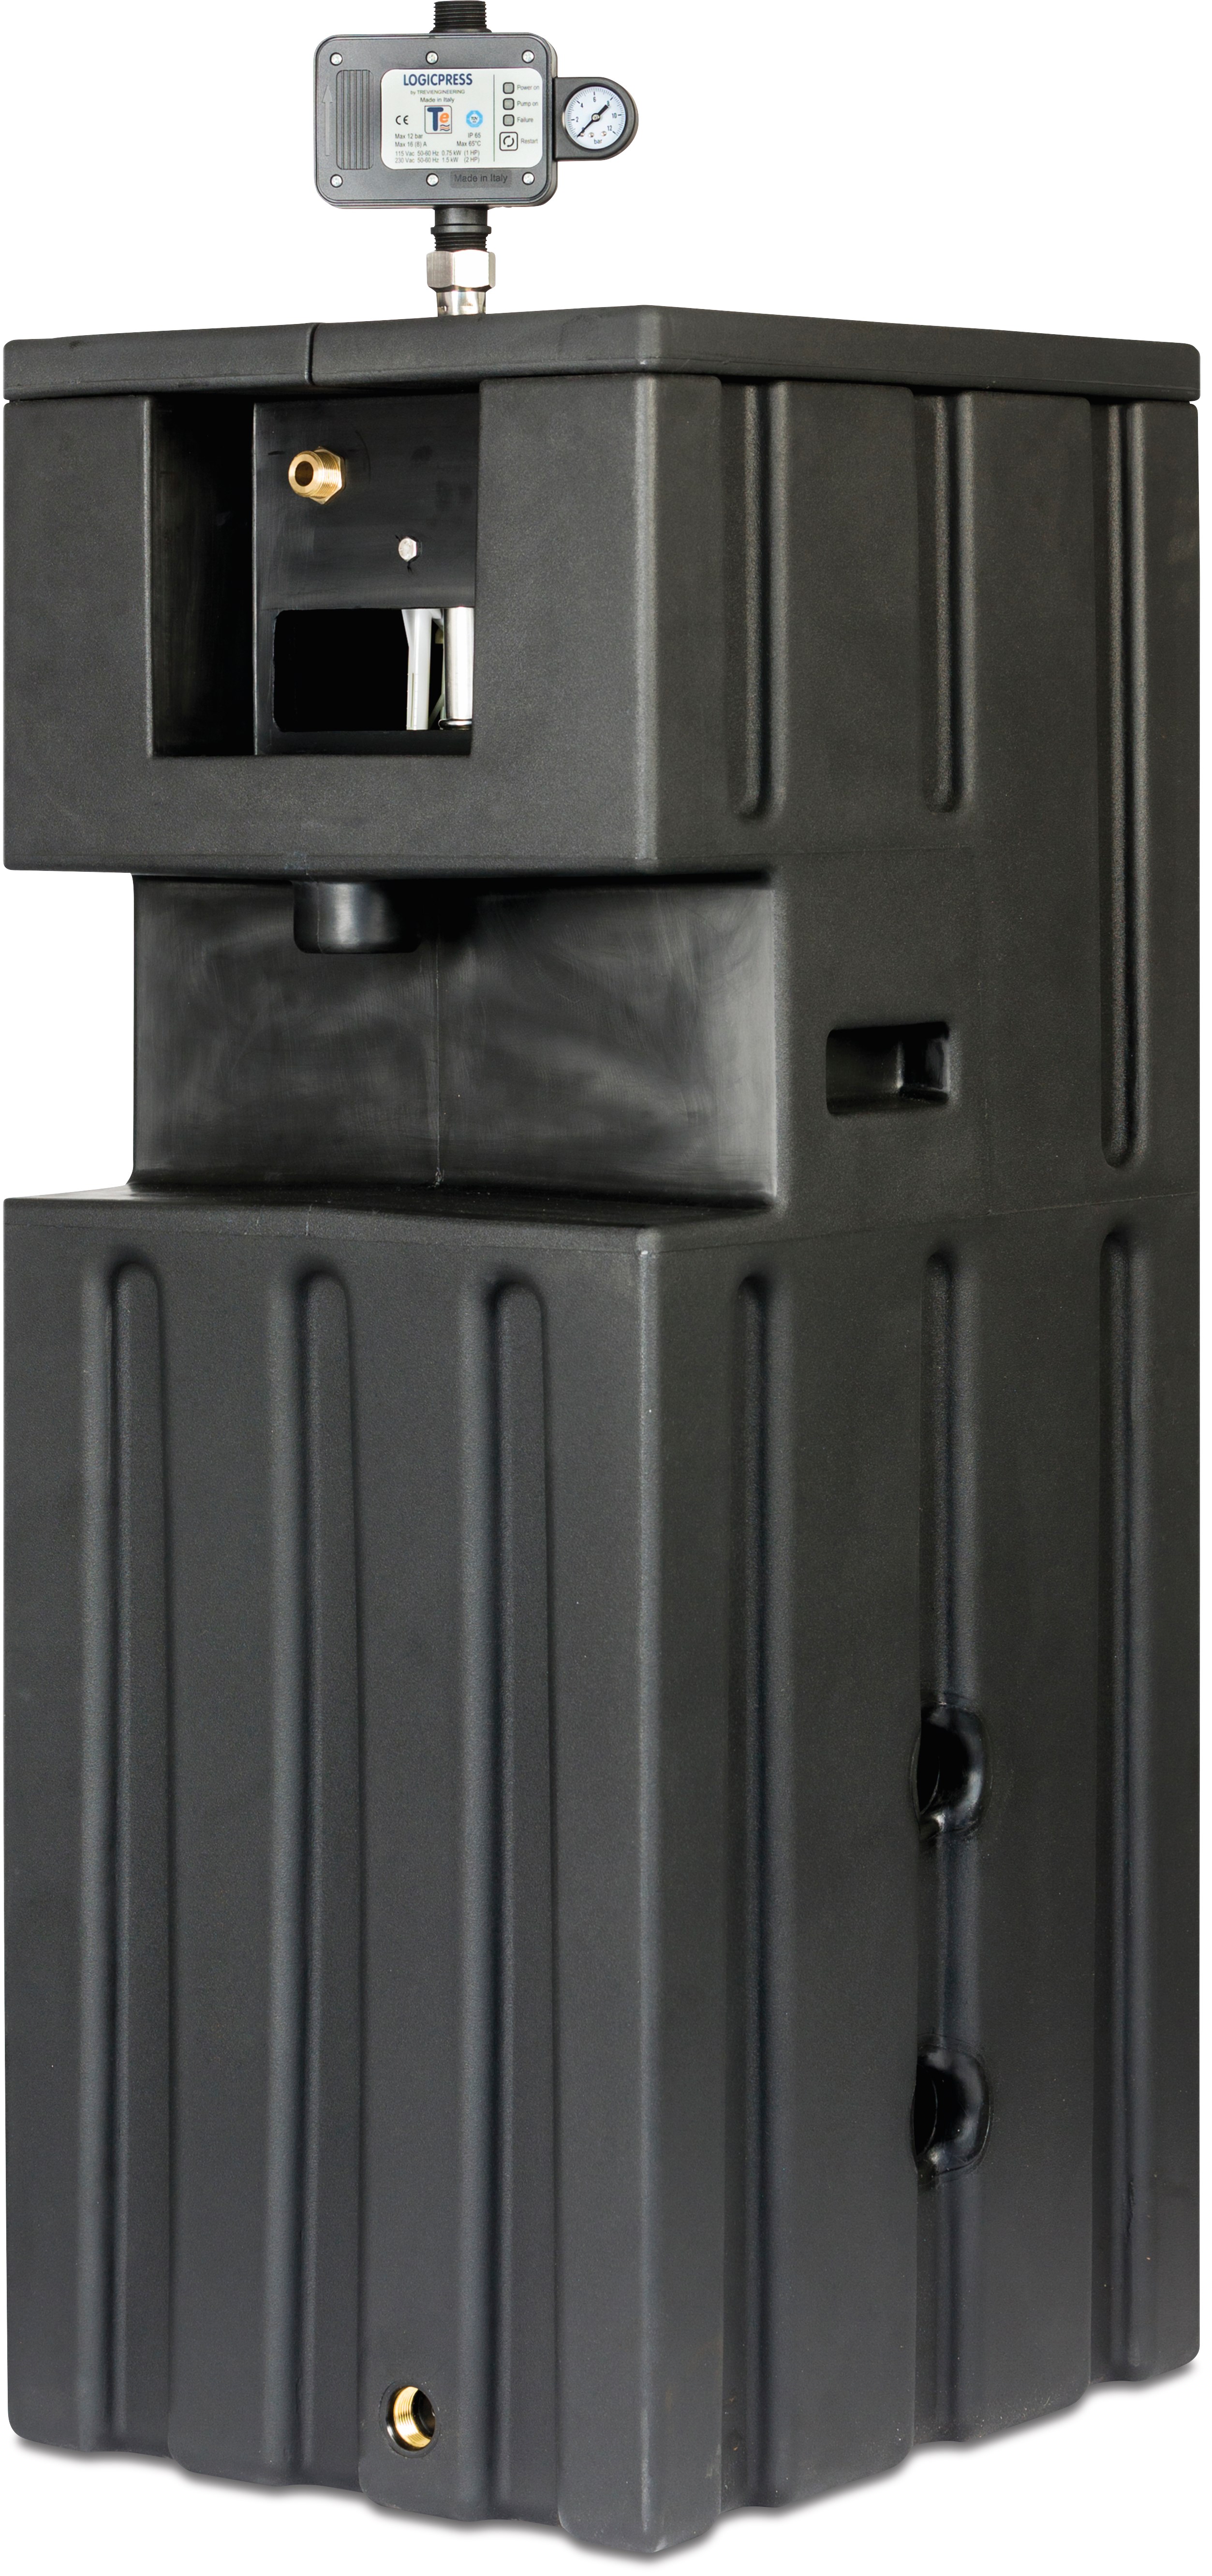 Zulaufbehälter, Typ Combi DSCT mit Minisub